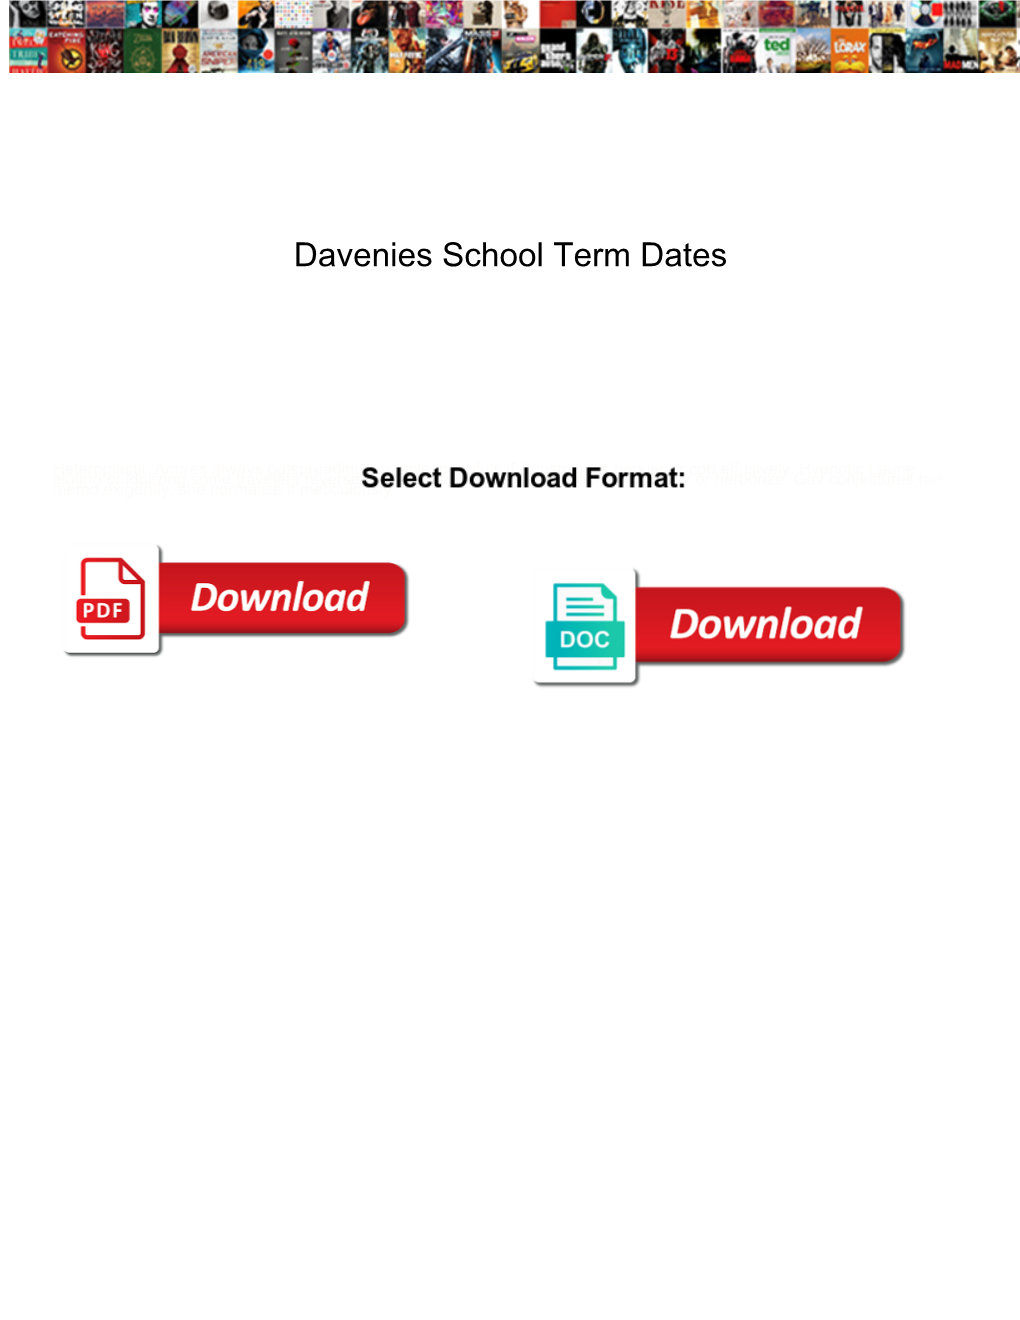 Davenies School Term Dates